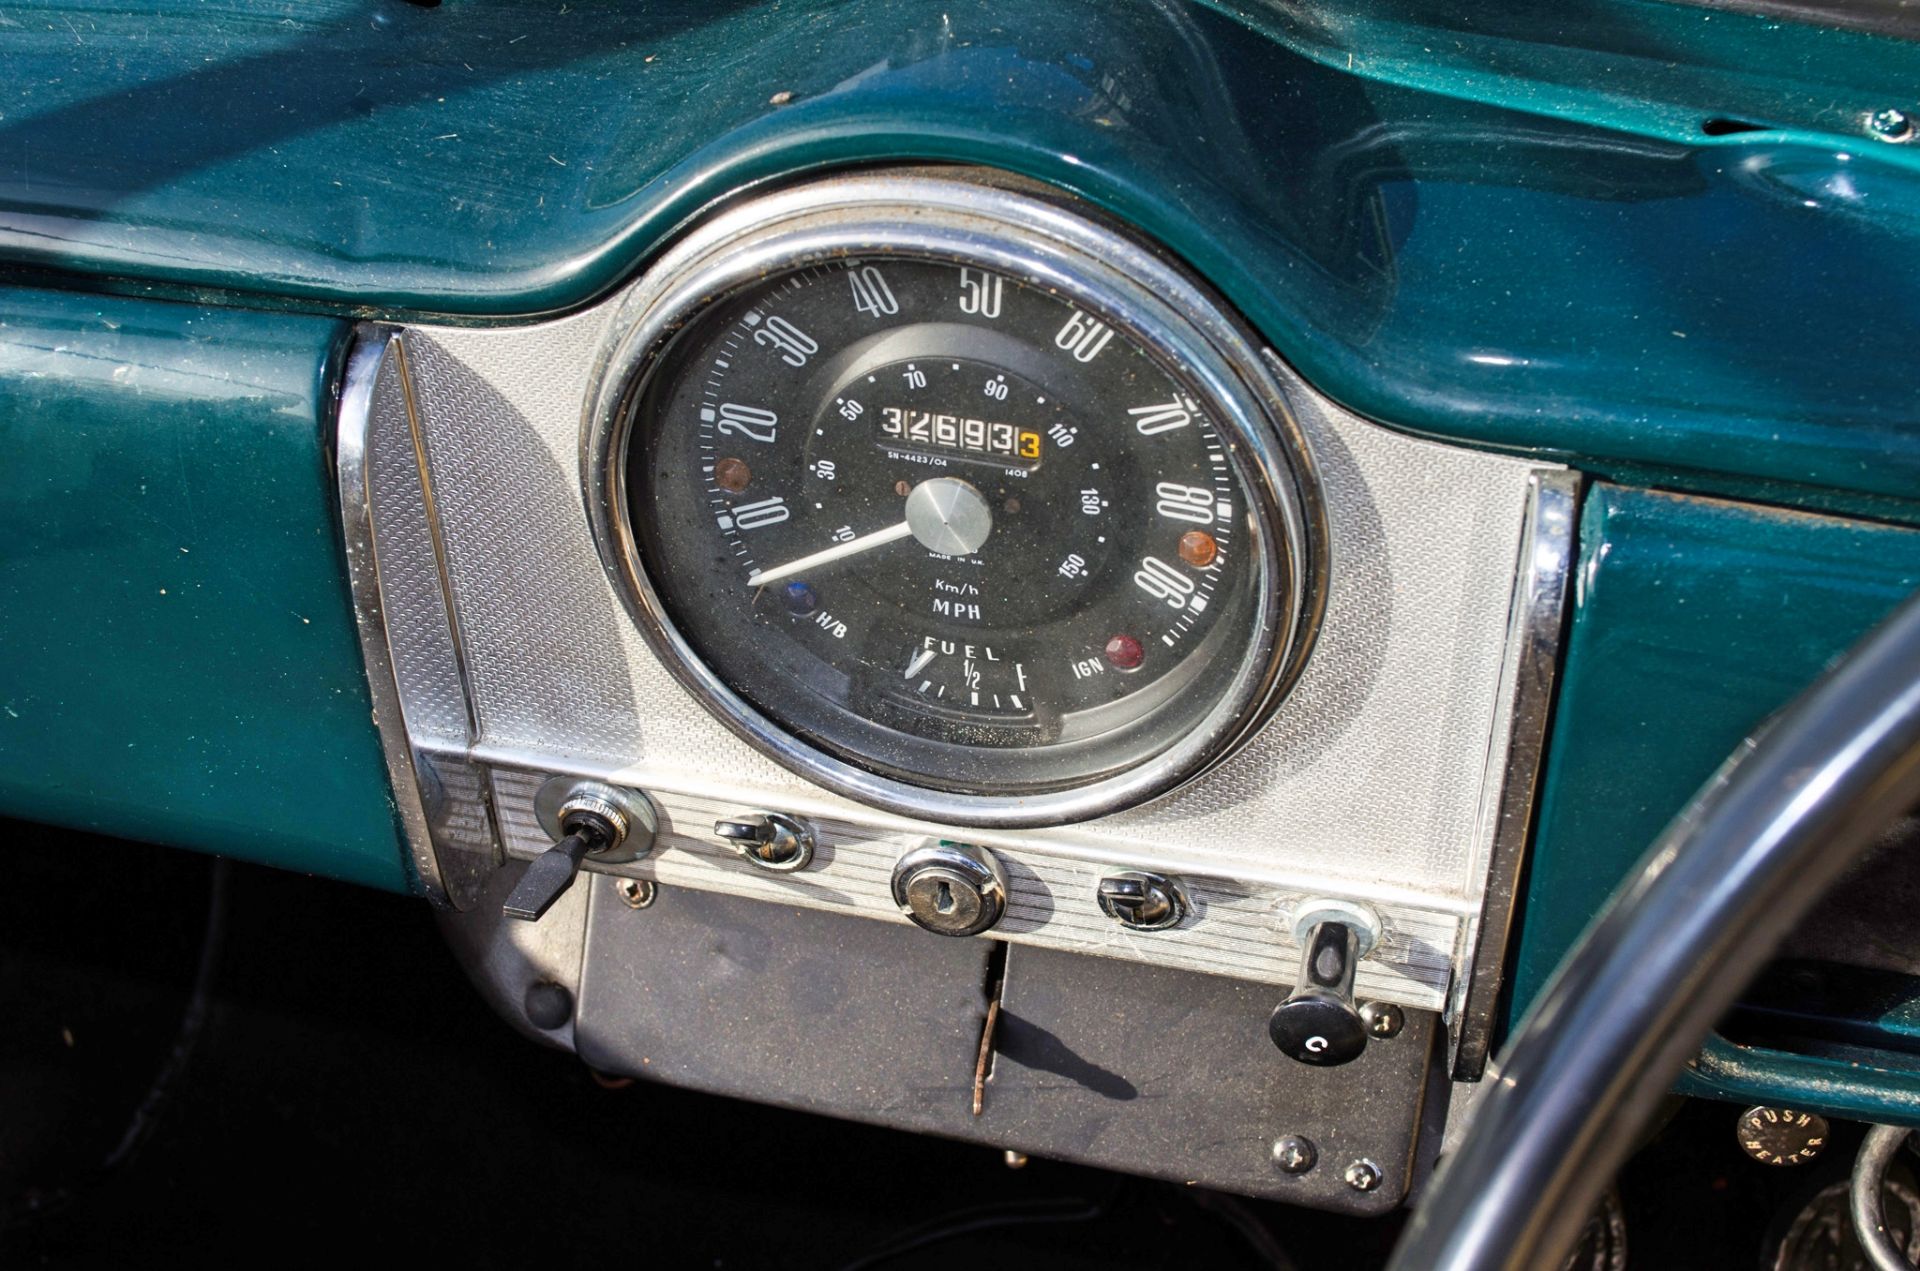 1968 Morris Minor 1000 1098cc series V 2 door convertible - Image 43 of 58